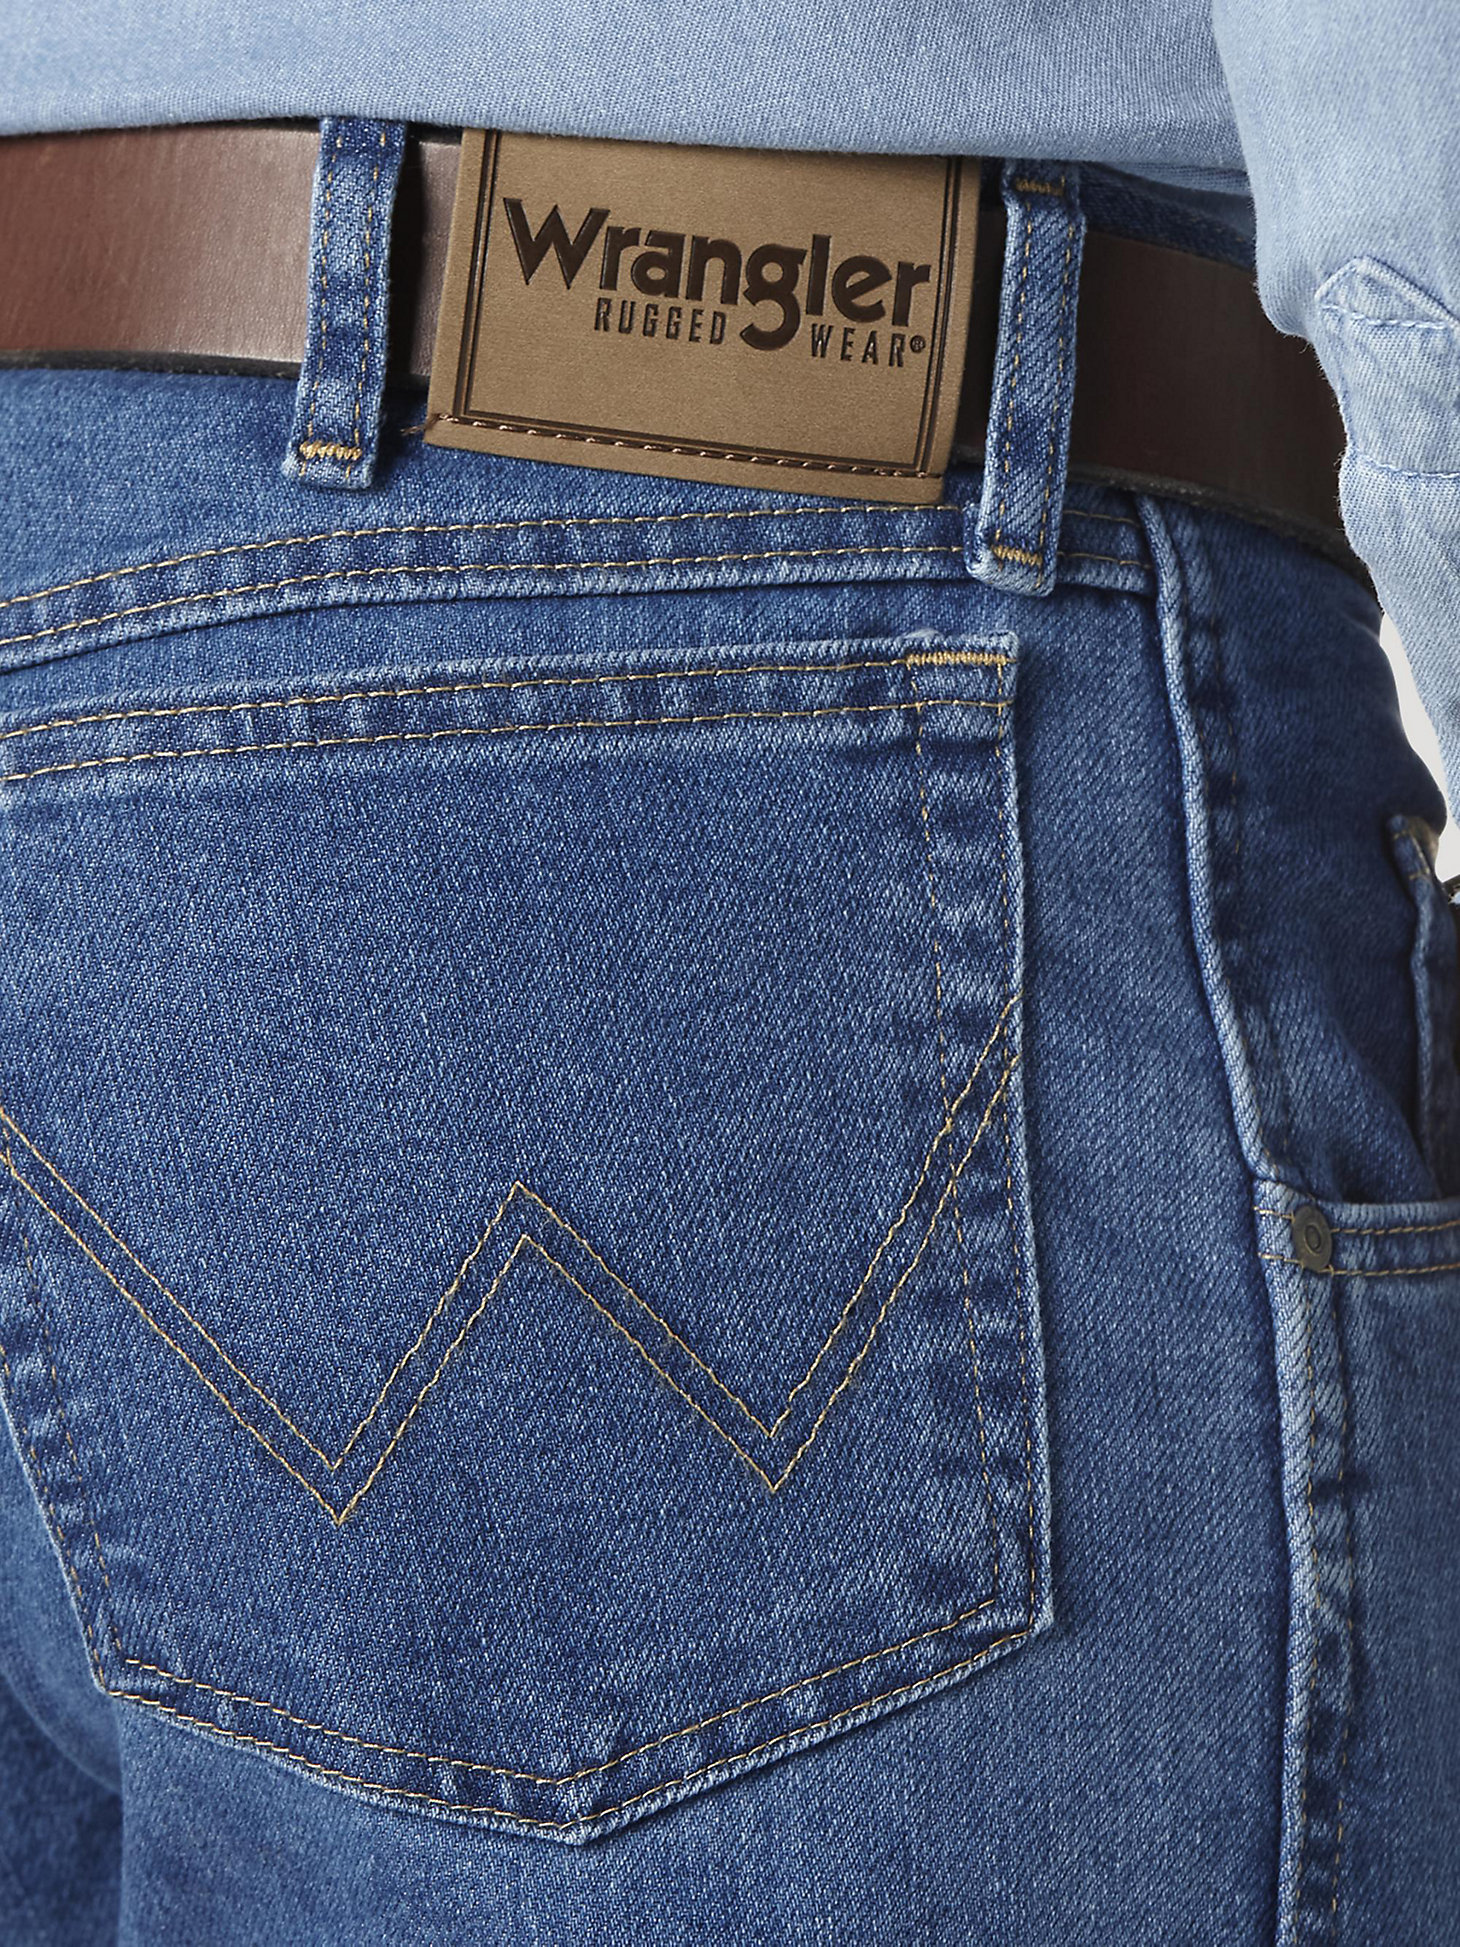 Wrangler Rugged Wear® Relaxed Stretch Flex Denim Jean - Stonewashed in Stonewashed alternative view 3